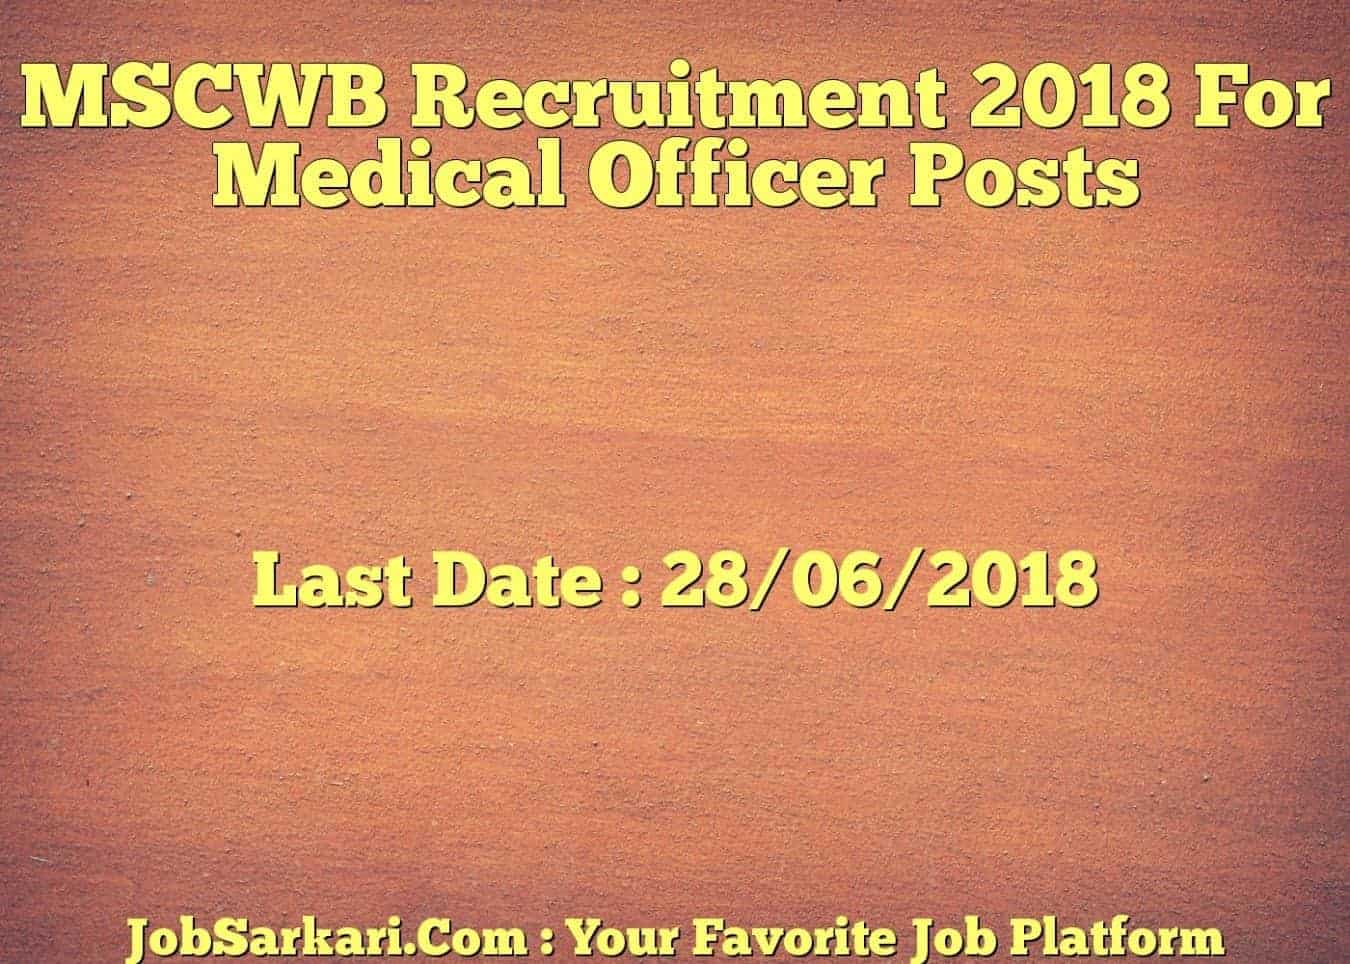 MSCWB Recruitment 2018 For Medical Officer Posts